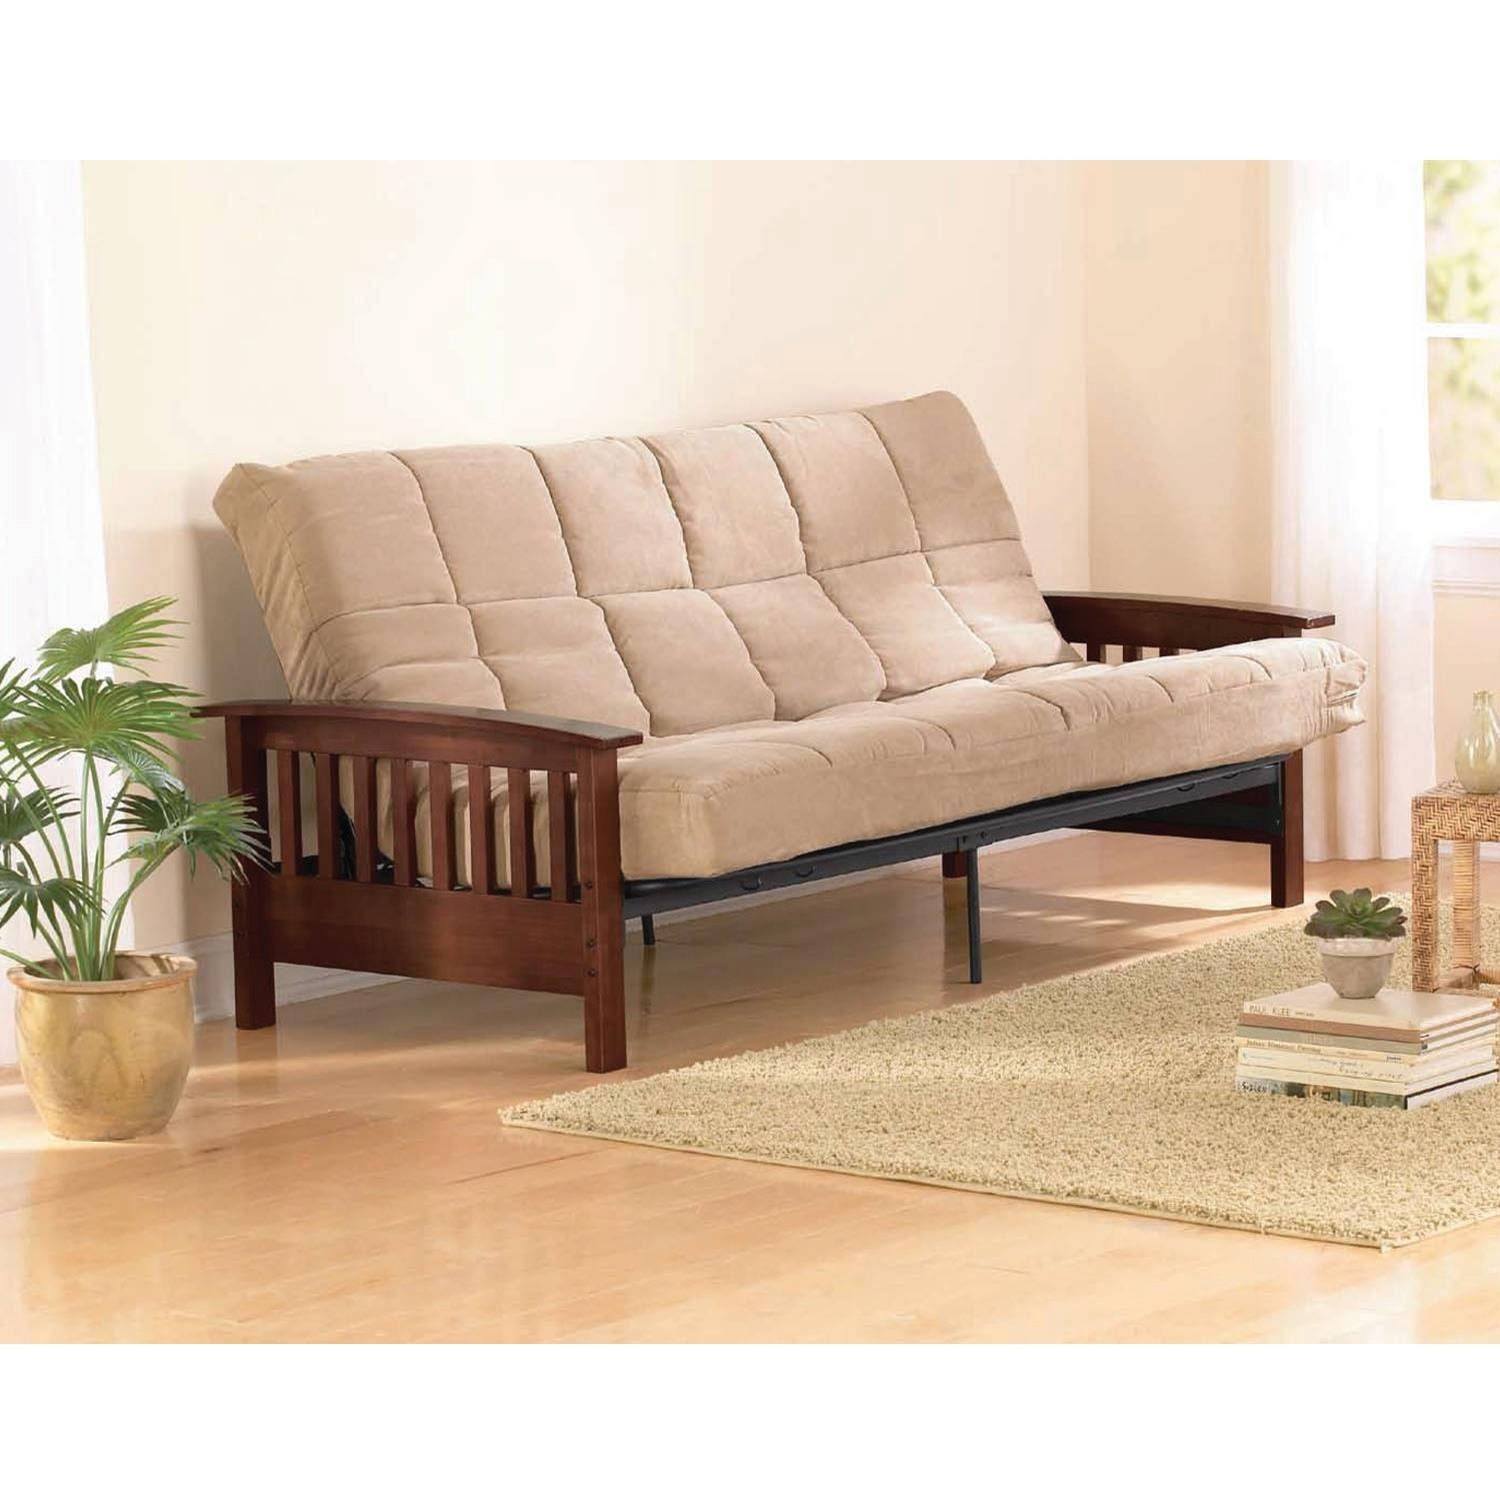 Belleze Convertible Futon Folding Sofa Bed Couch Sleep Adjustable Regarding Convertible Futon Sofa Beds (View 7 of 15)